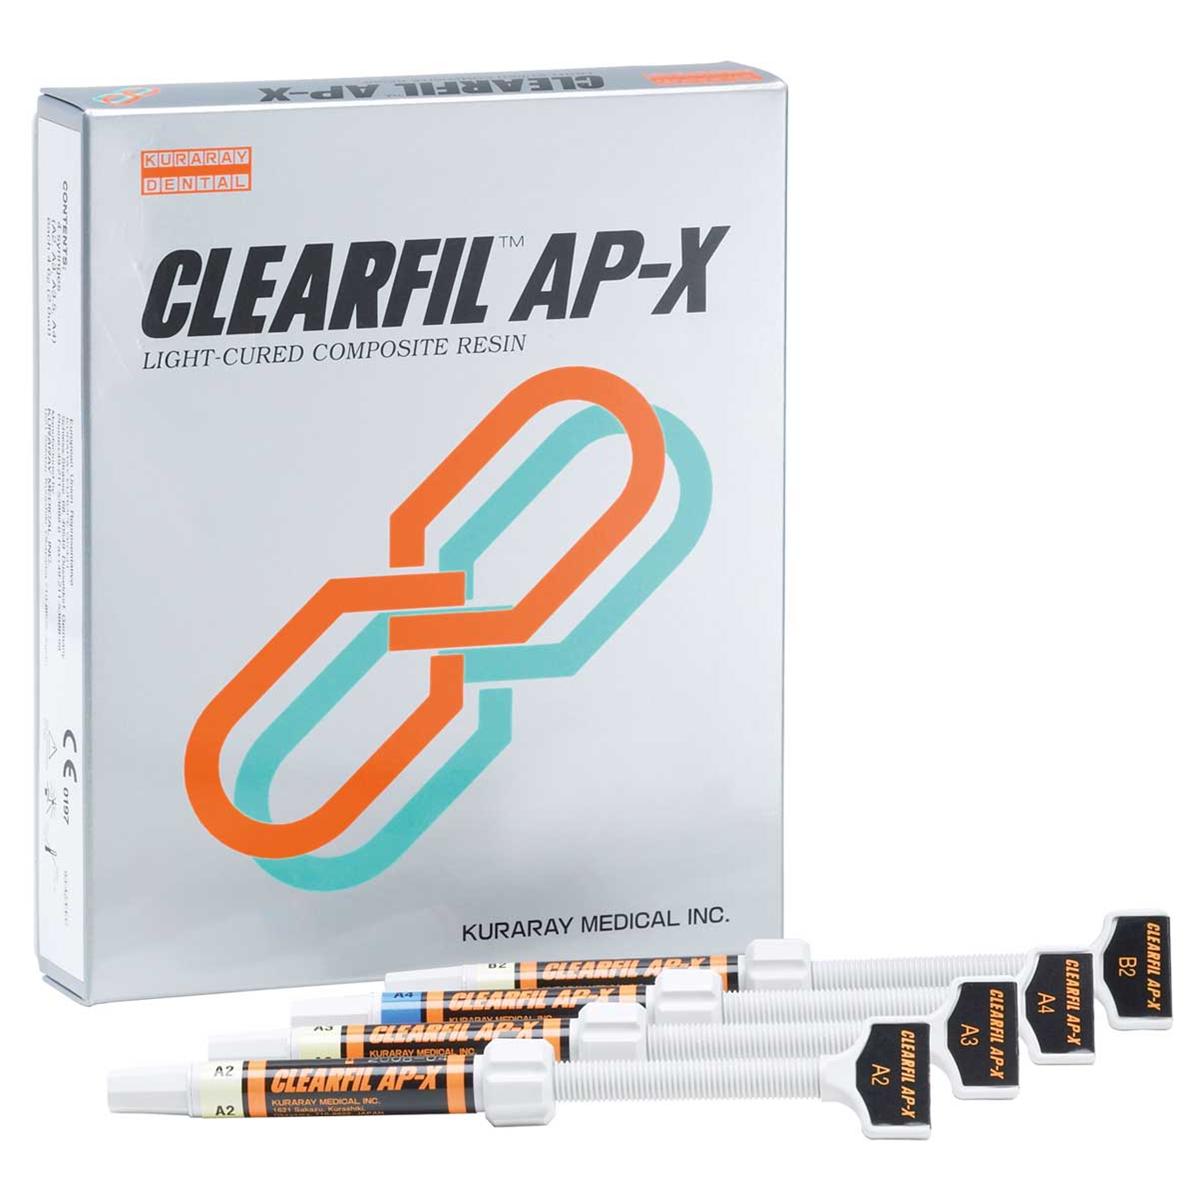 Clearfil AP-X: PLT HO, 0.20 g x 20, kuraray #1754KA